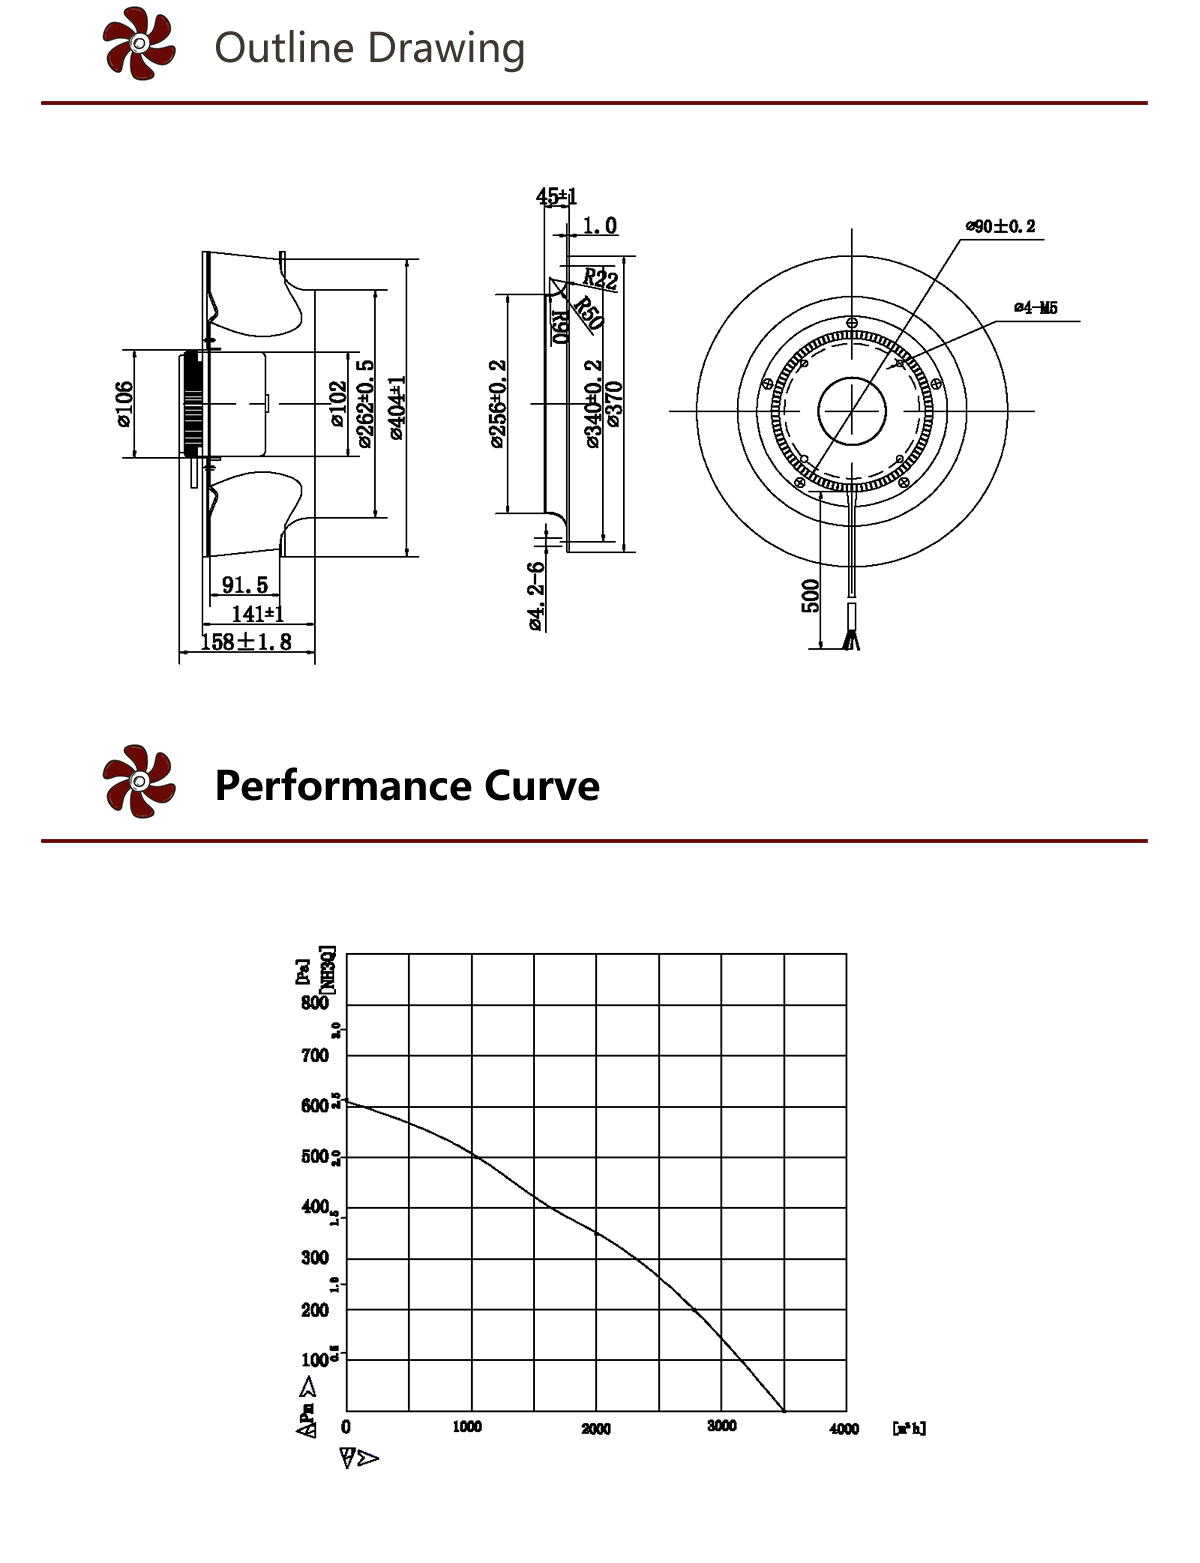 HEKO 400mm Powerful Super High Speed DC Backward Curved Centrifugal Fan (4)